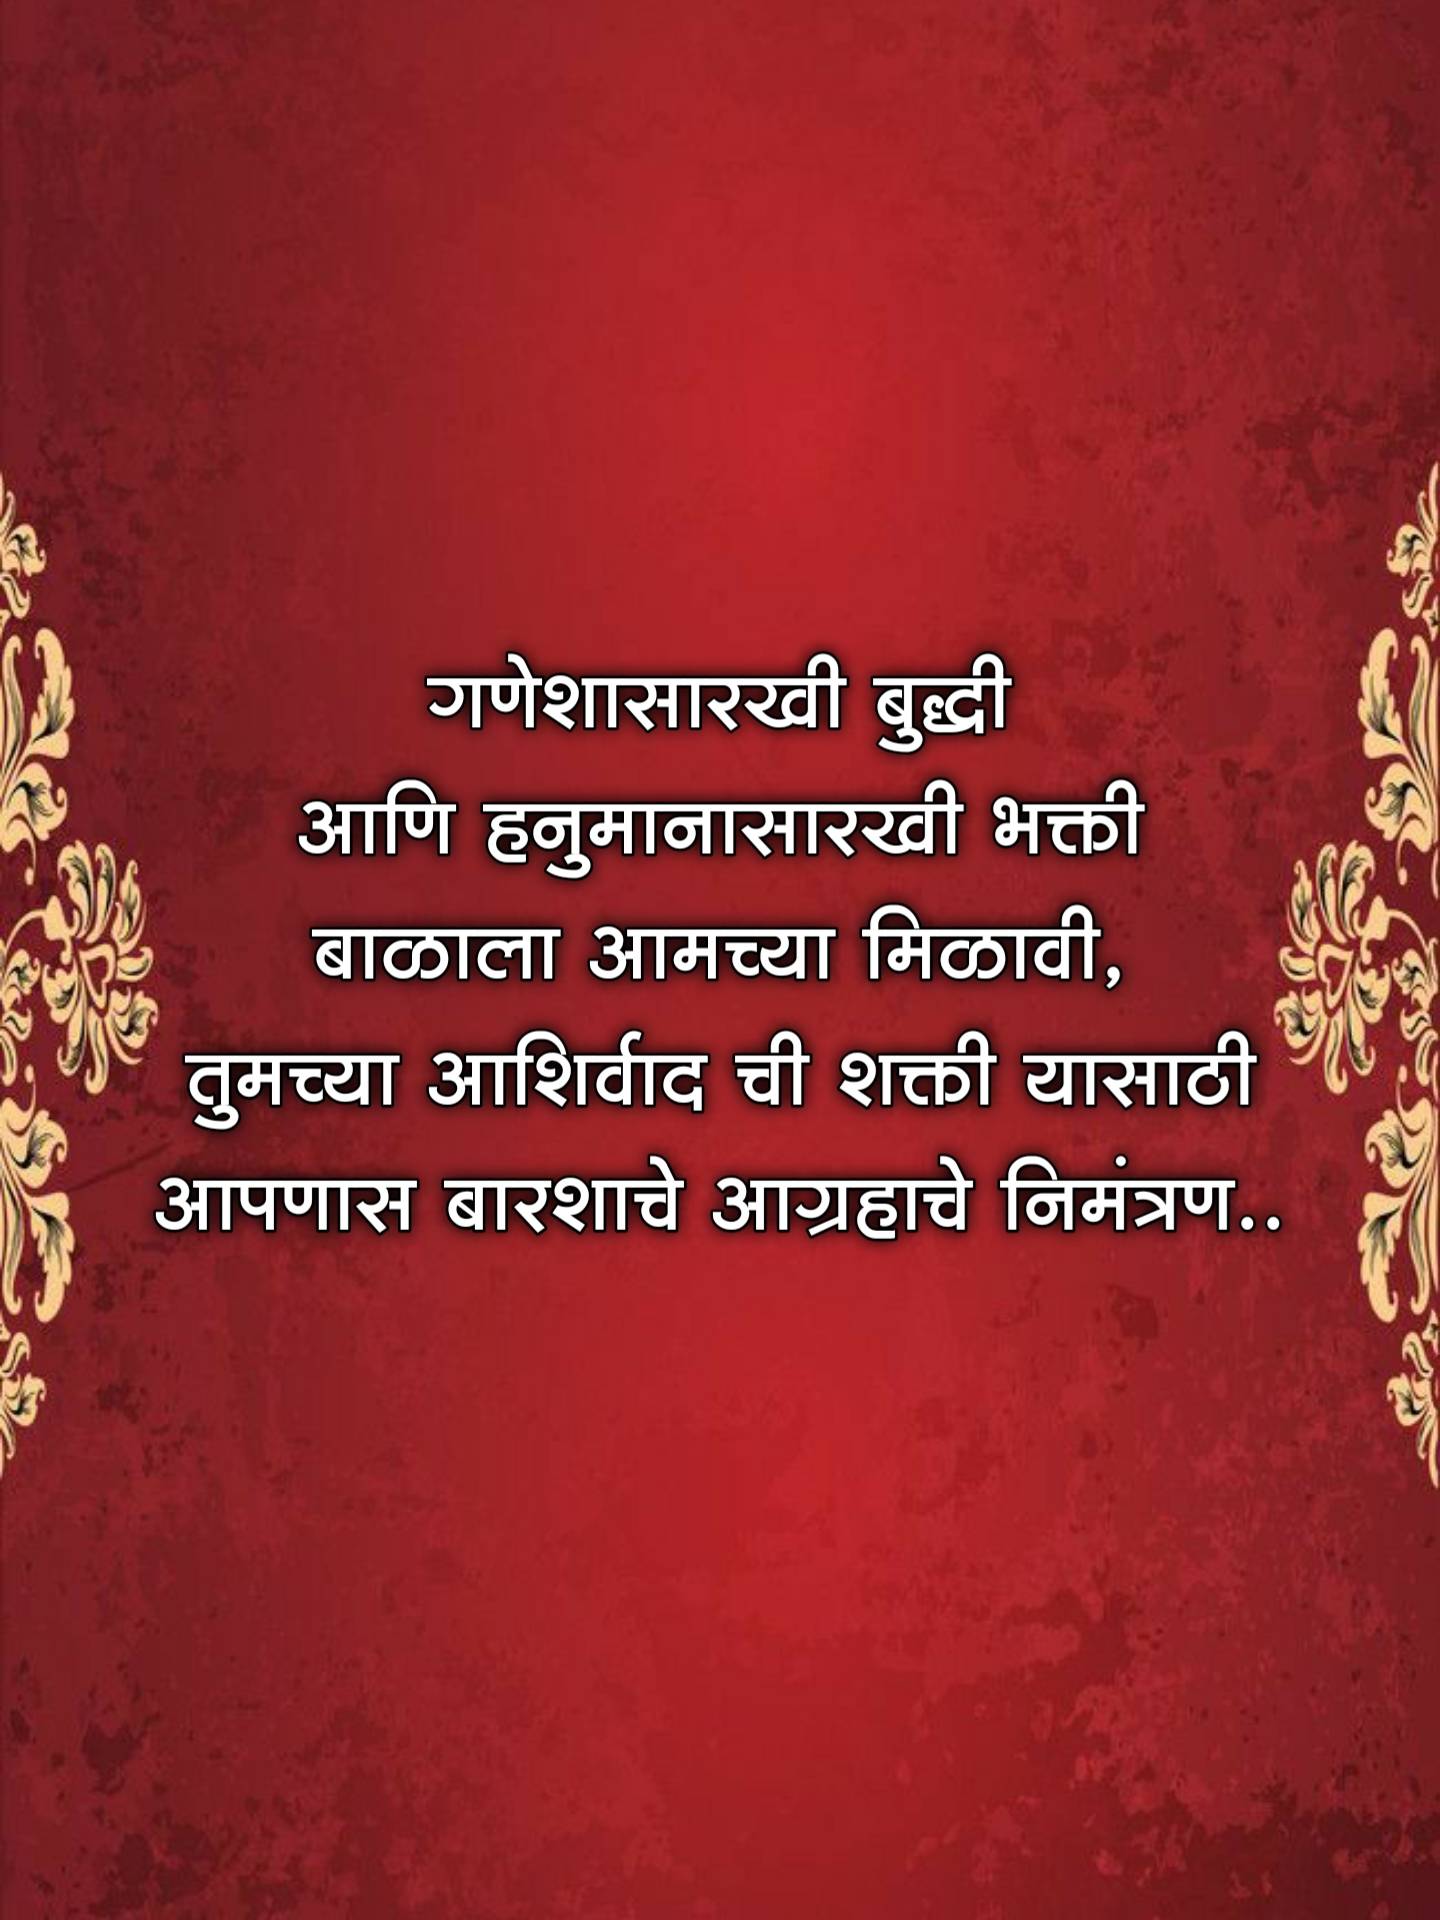 Barsa Invitation Card In Marathi 7 -